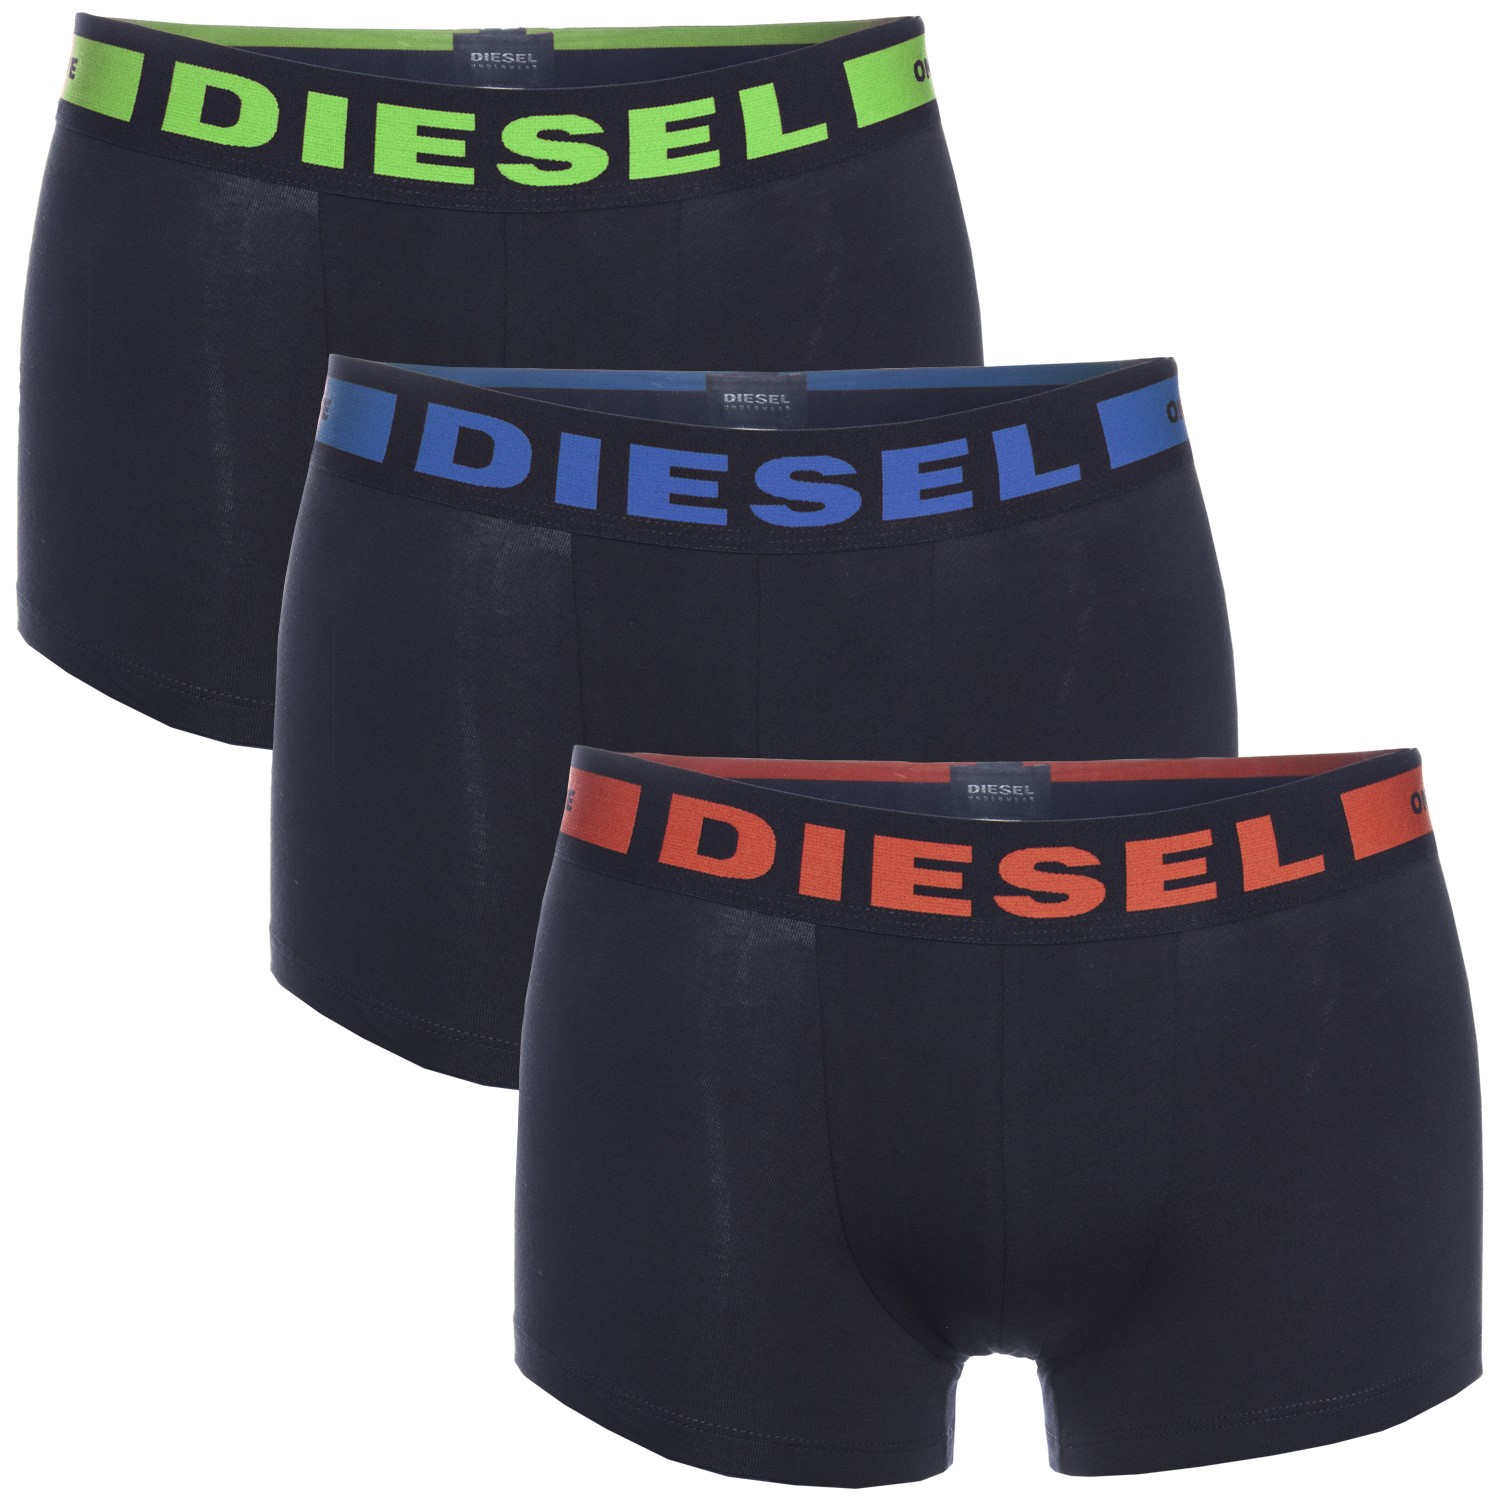 Diesel Kory Seasonal Edition Boxer Trunk